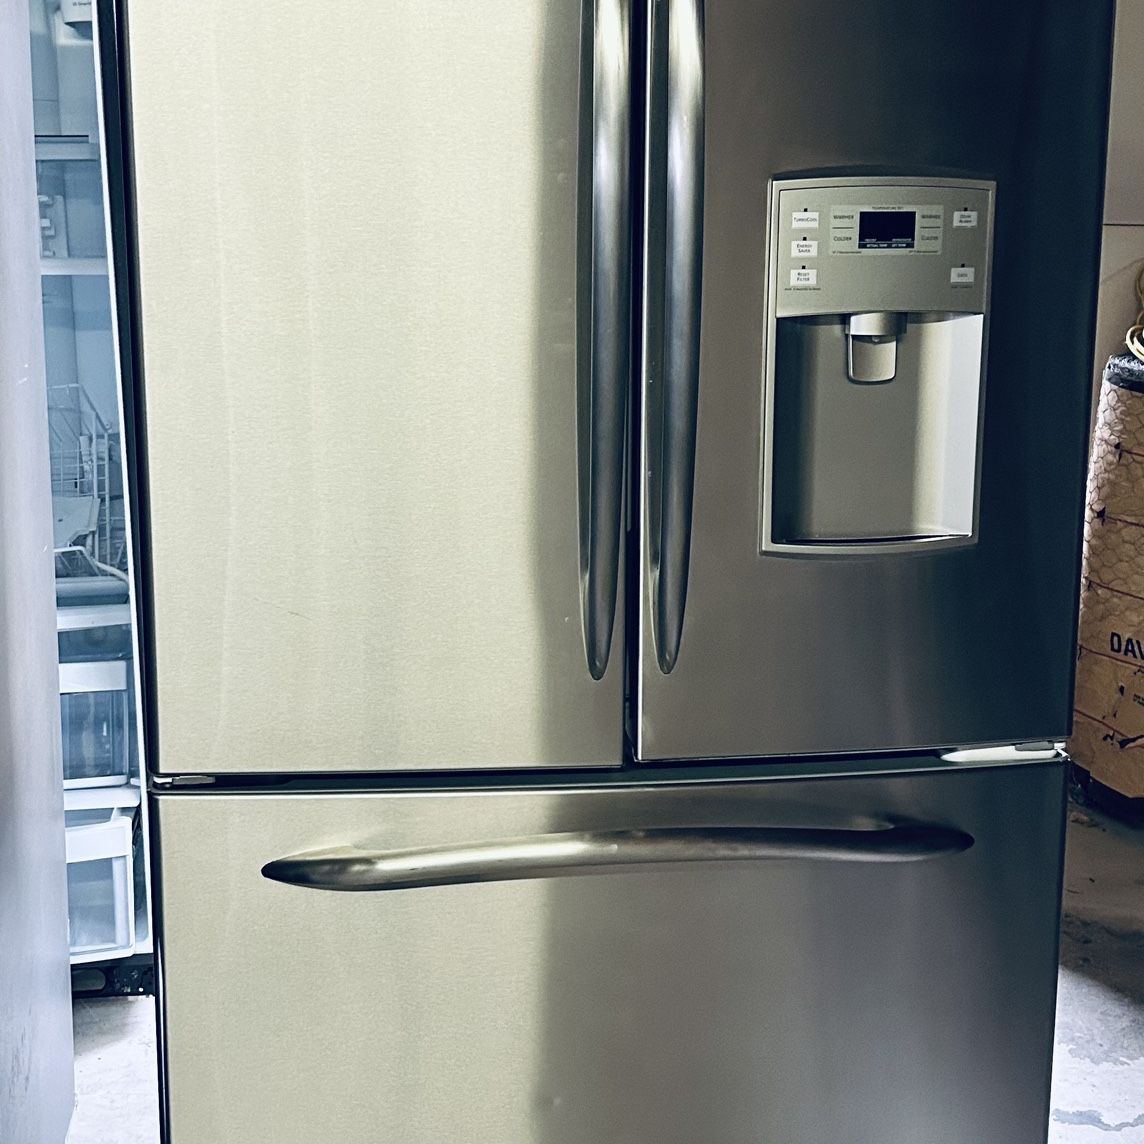 3 Door GE Refrigerator With Internal Ice Maker And Water Dispenser